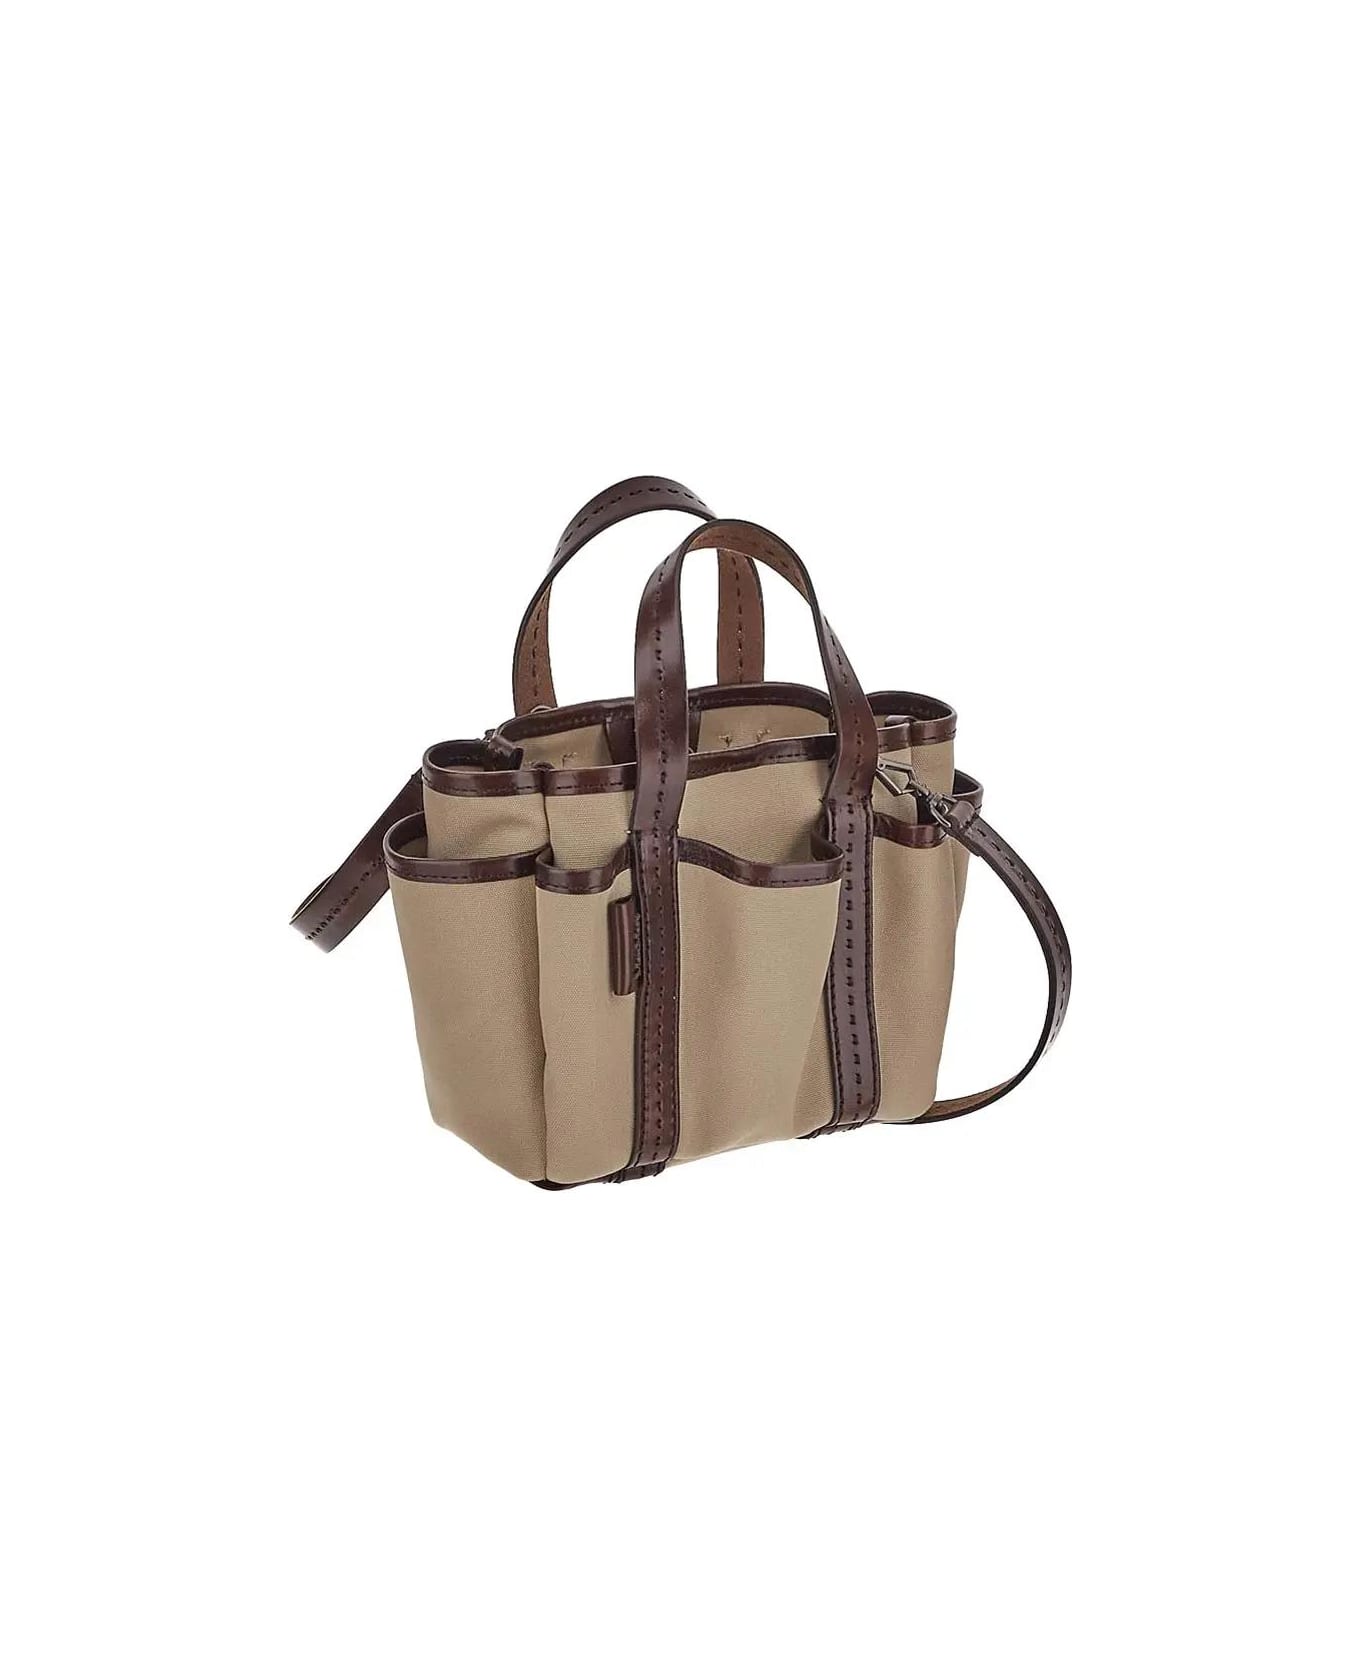 Max Mara Bucket Bag - Beige/brown